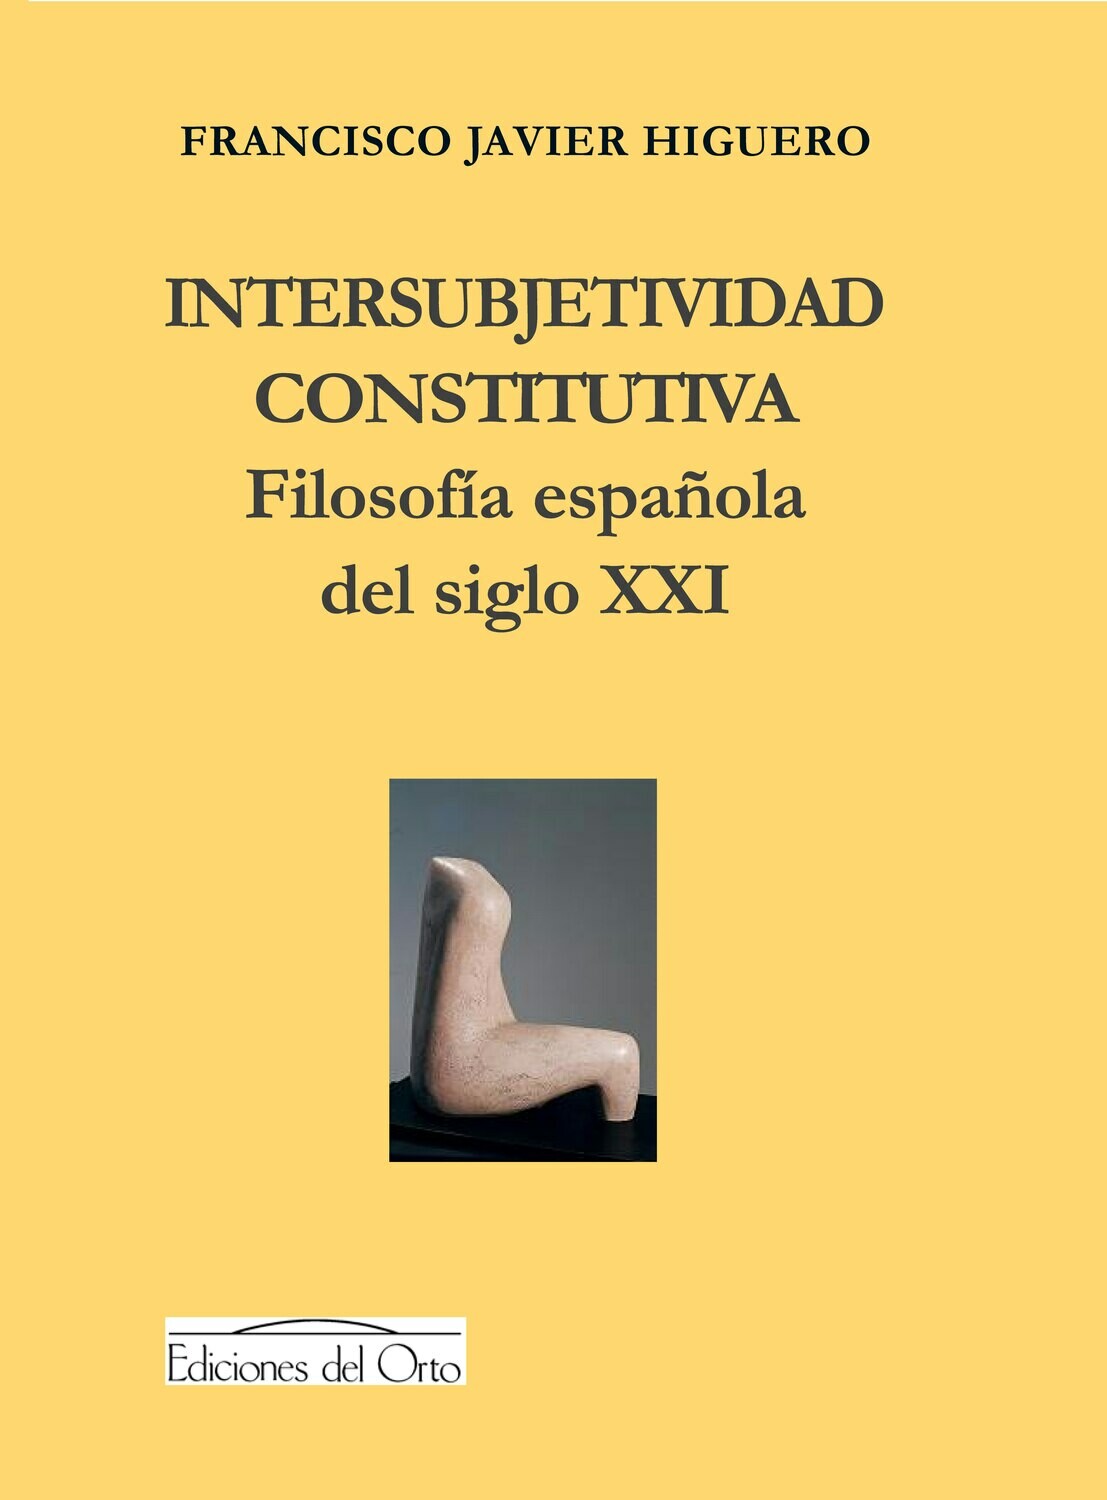 INTERSUBJETIVIDAD CONSTITUTIVA. FILOSOFIA ESPAÑOLA DEL SIGLO XXI